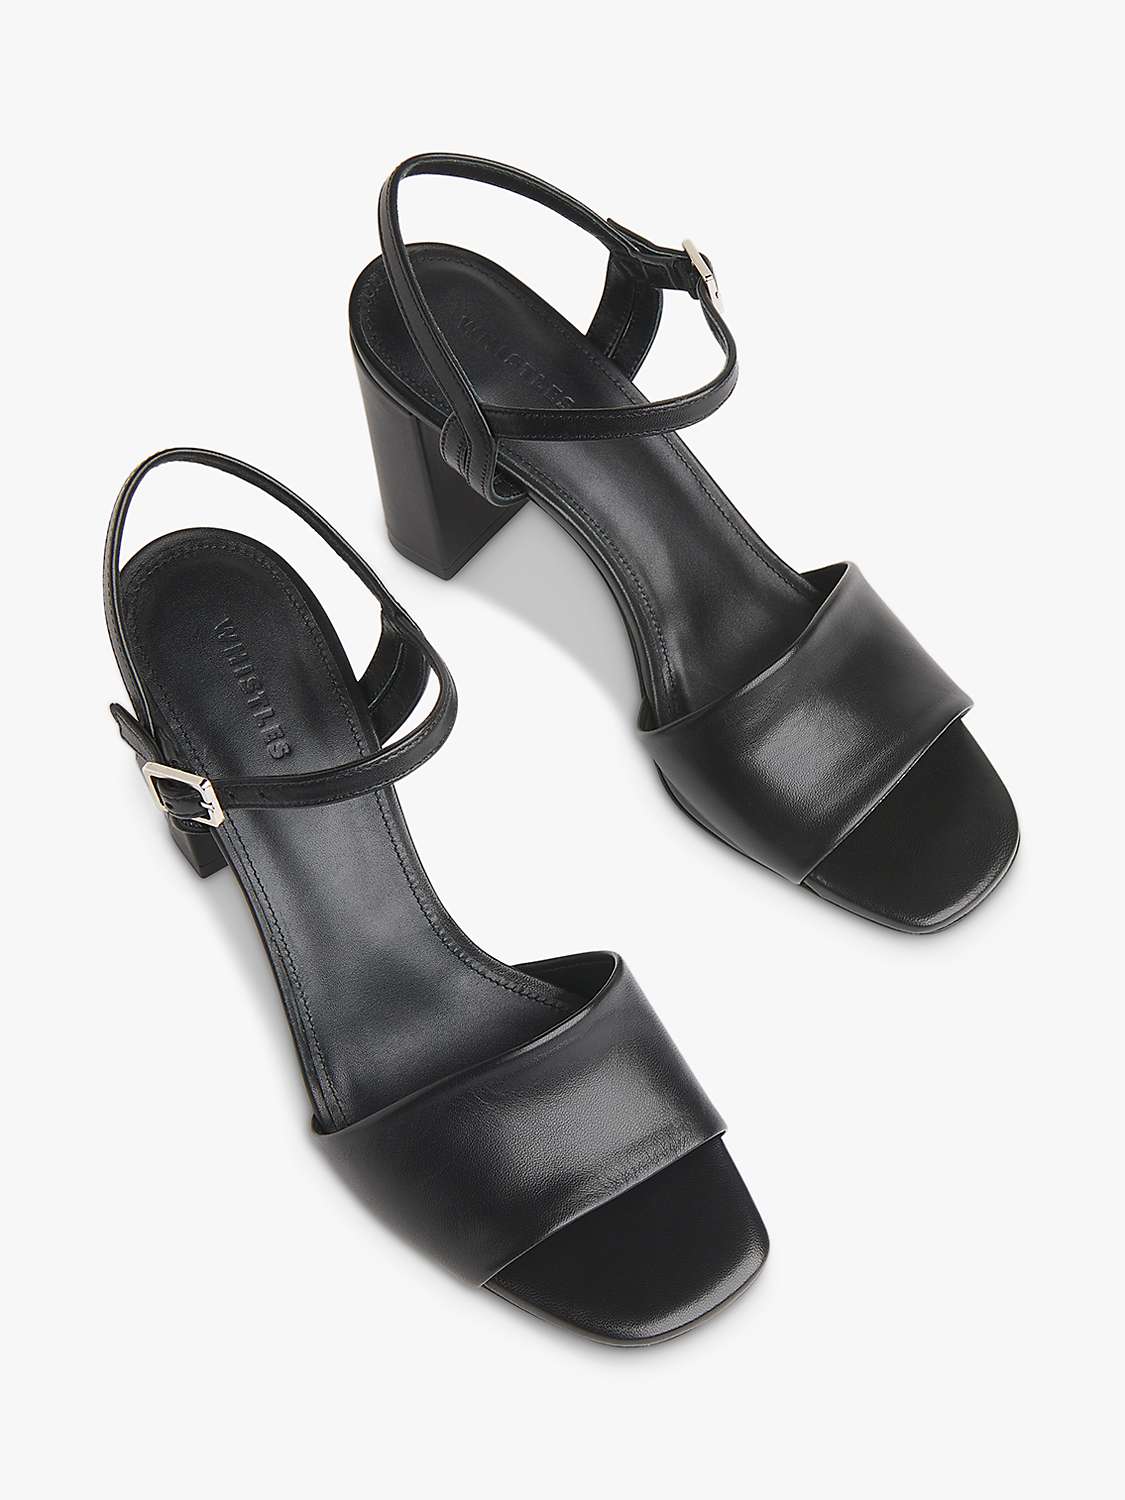 Buy Whistles Lilley Leather Block Heel Sandals, Black Online at johnlewis.com